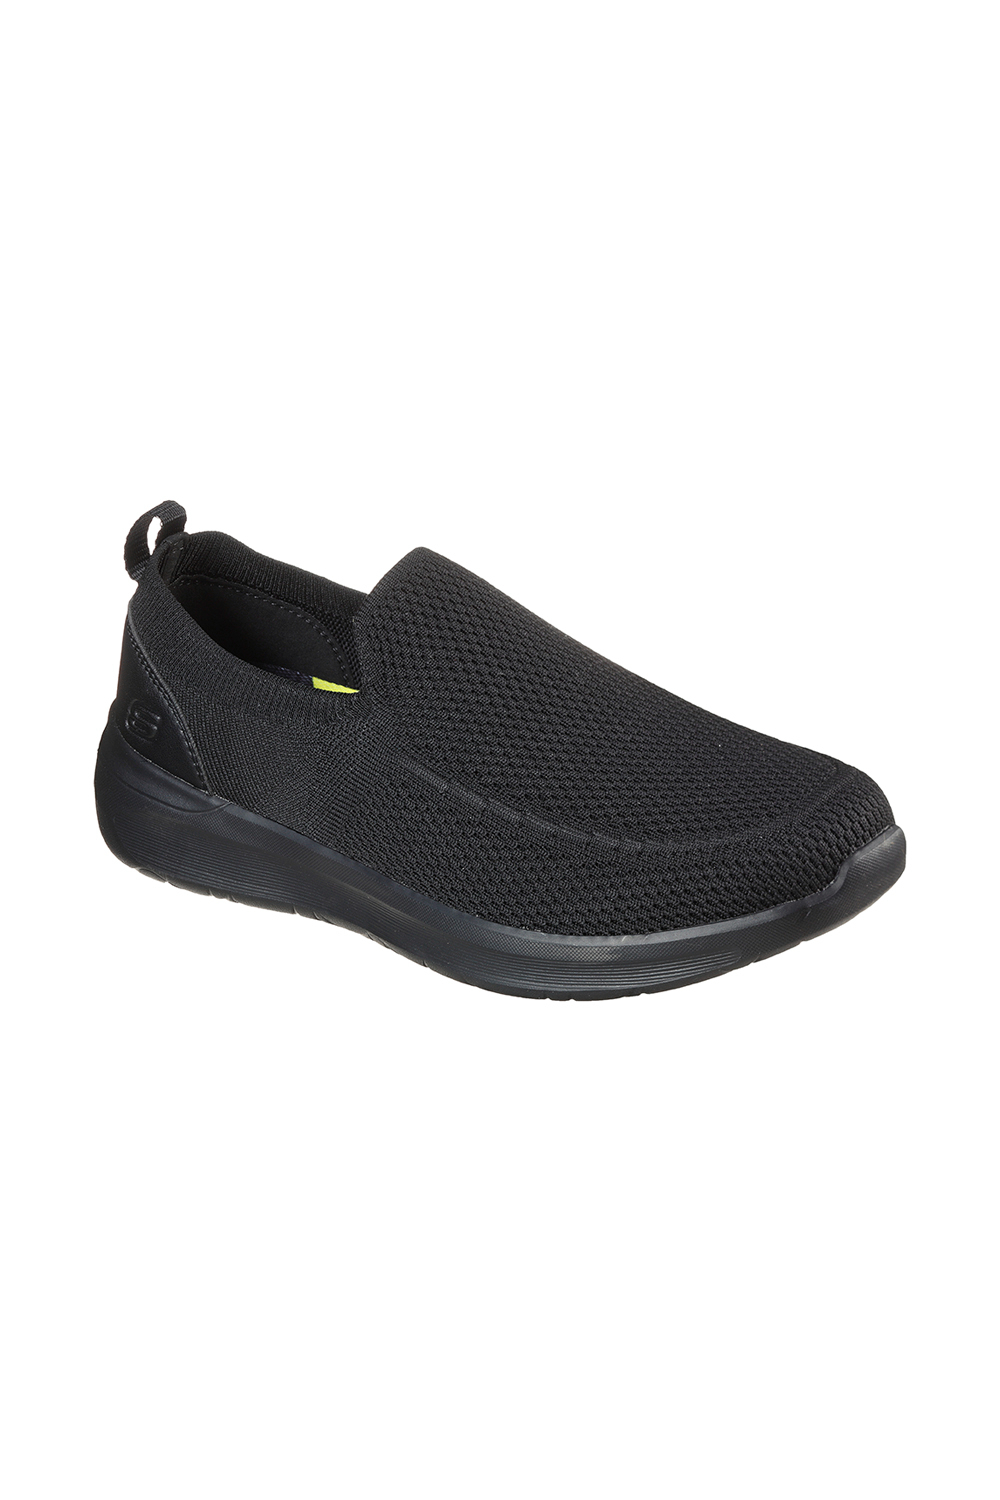 Skechers -210275-Bbk-Lattimore-Warner-Men-Lifestyle-Shoe | Odel.lk